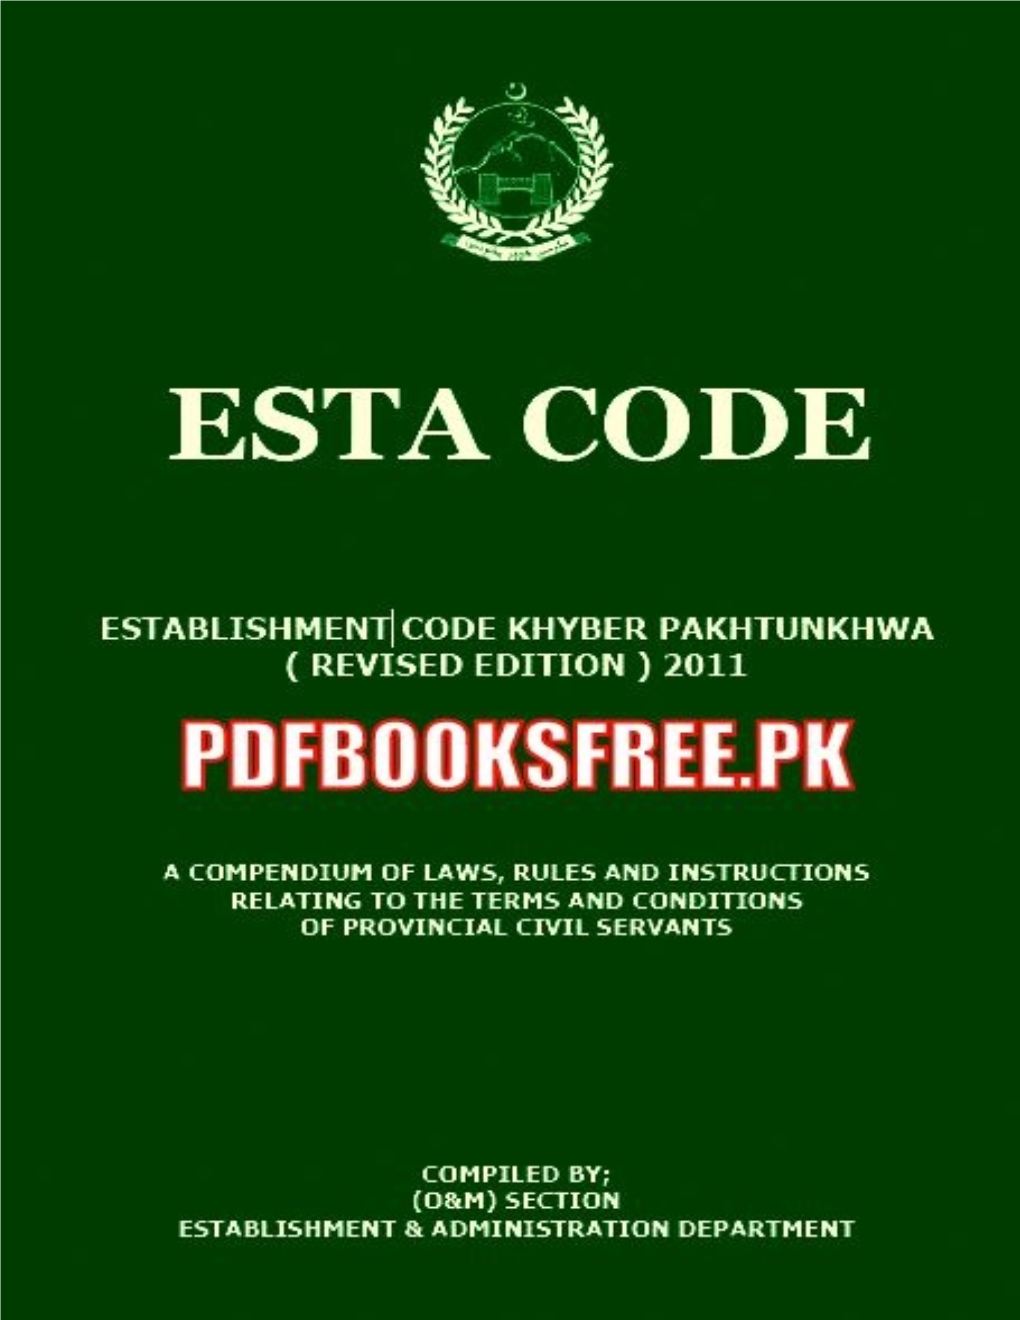 Establishment Code Khyber Pakhtunkhwa ( Revised Edition ) 2011